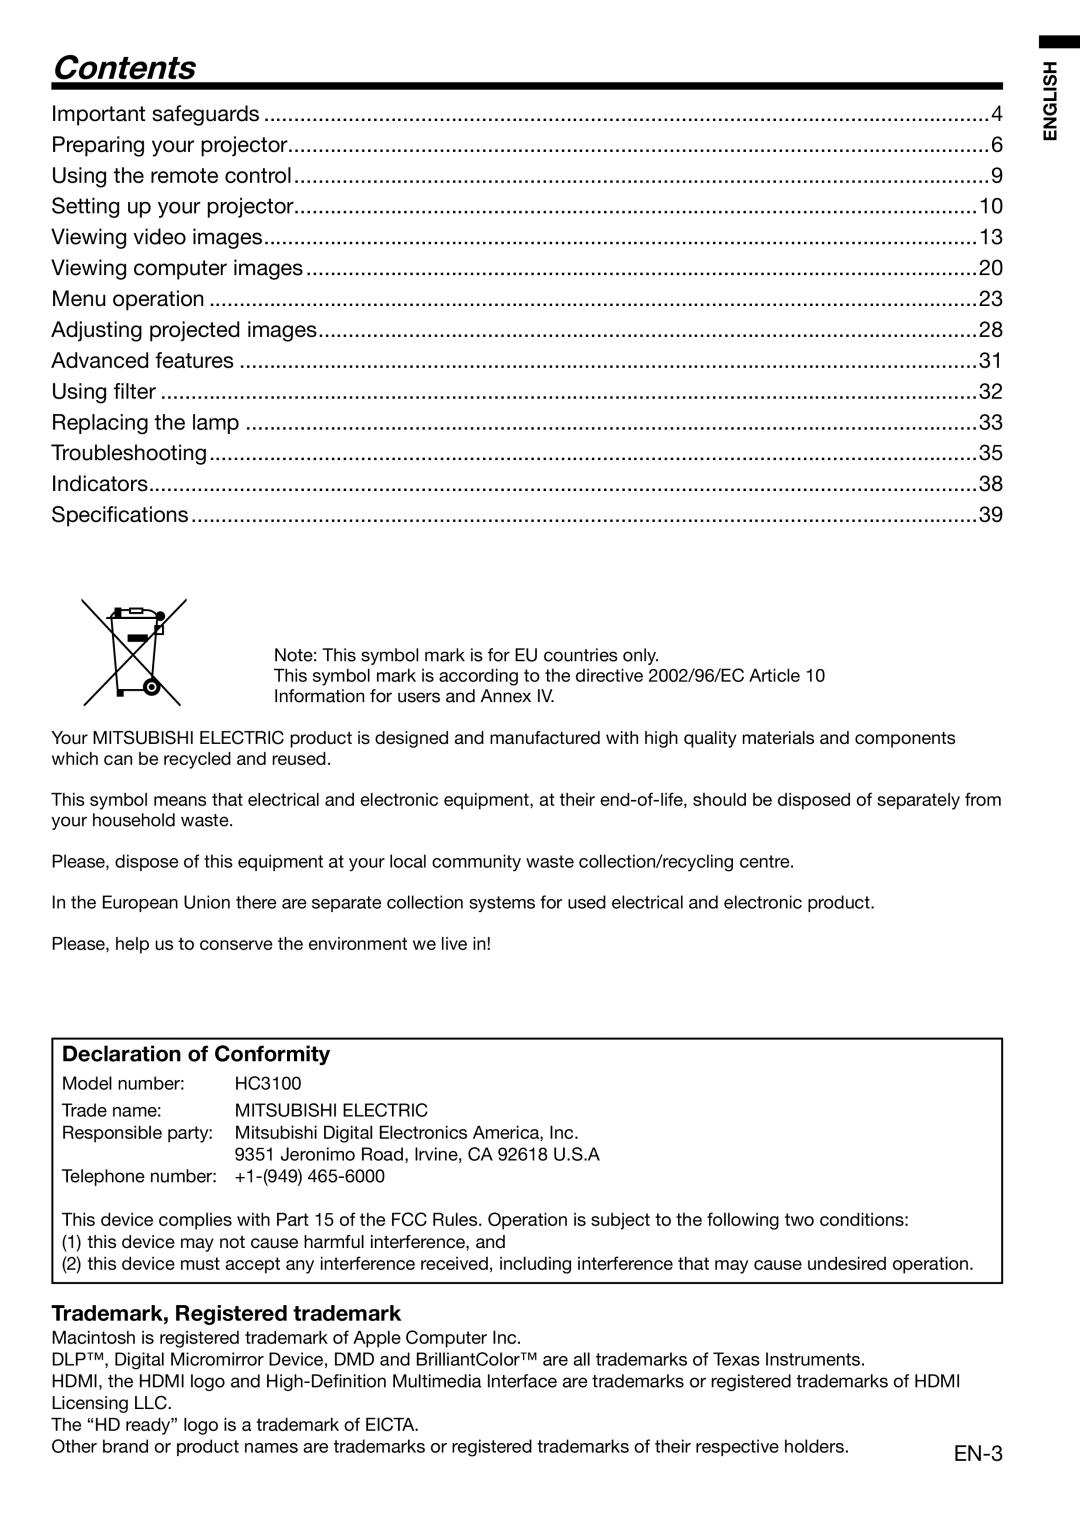 Mitsubishi Electronics HC3100 user manual Contents, Declaration of Conformity, Trademark, Registered trademark 